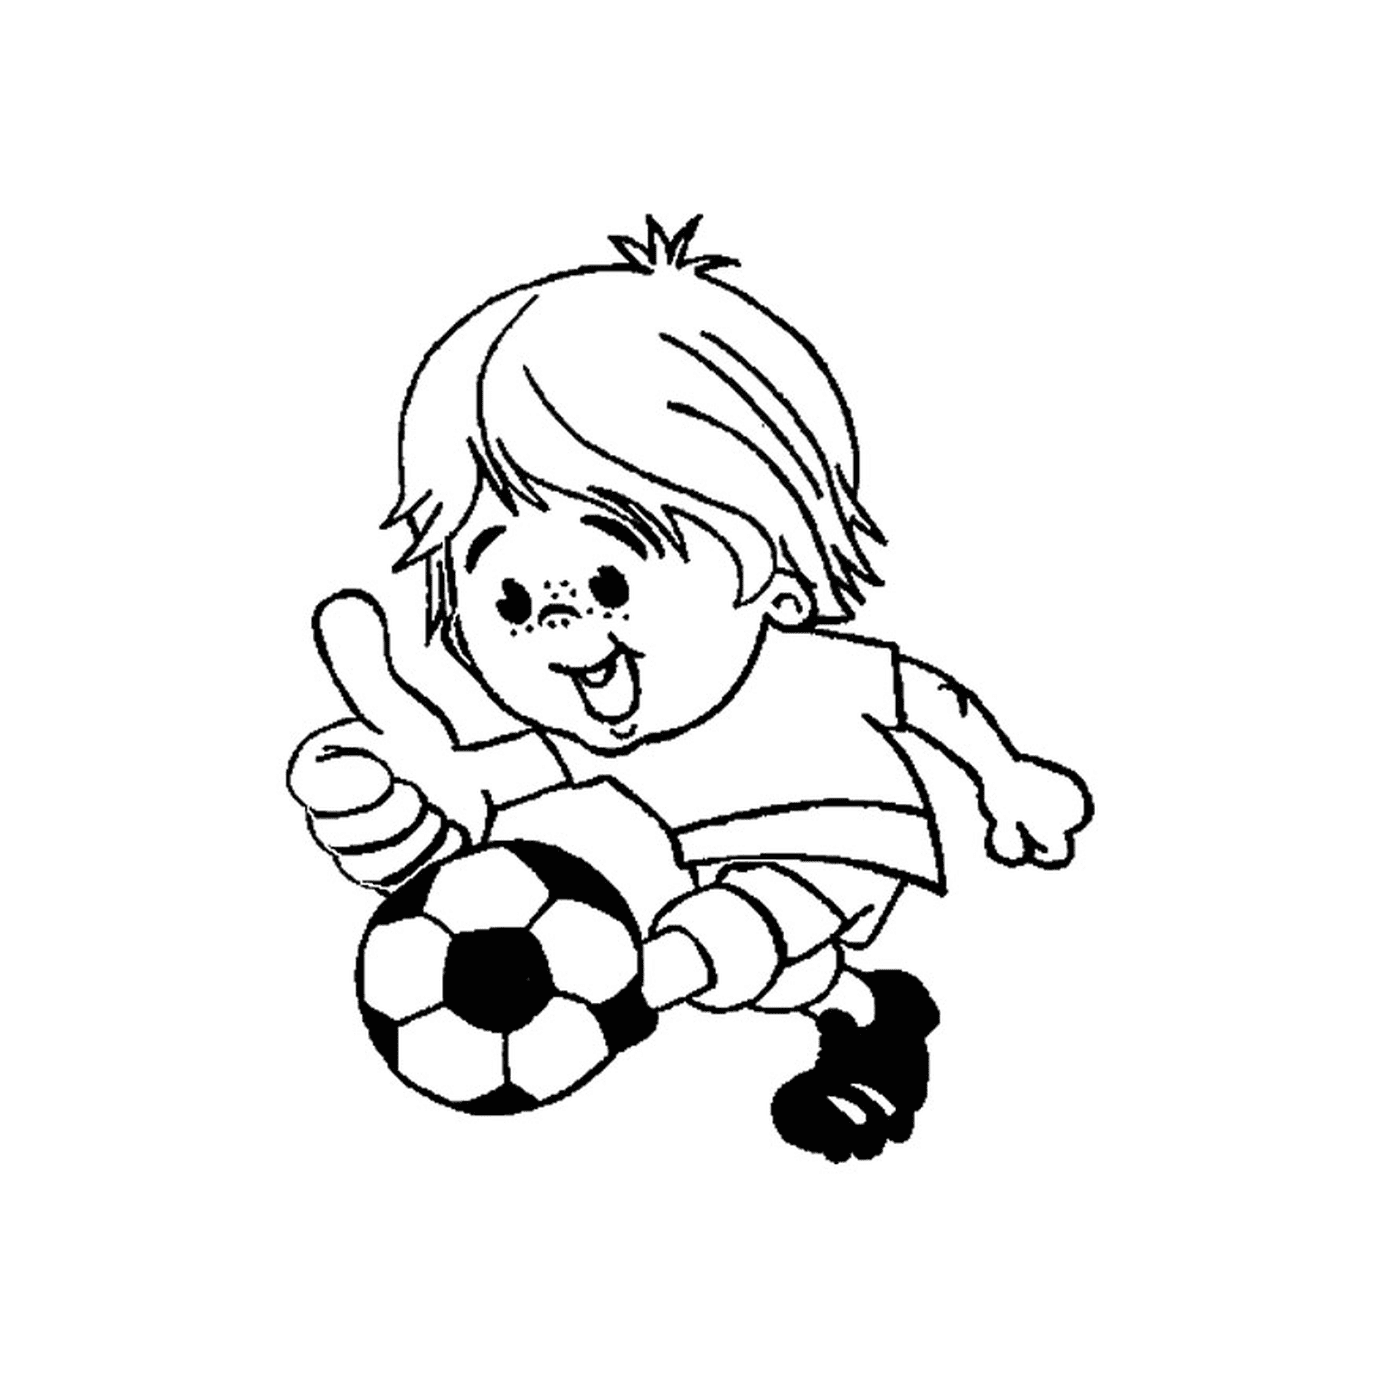   Un garçon joue au football 